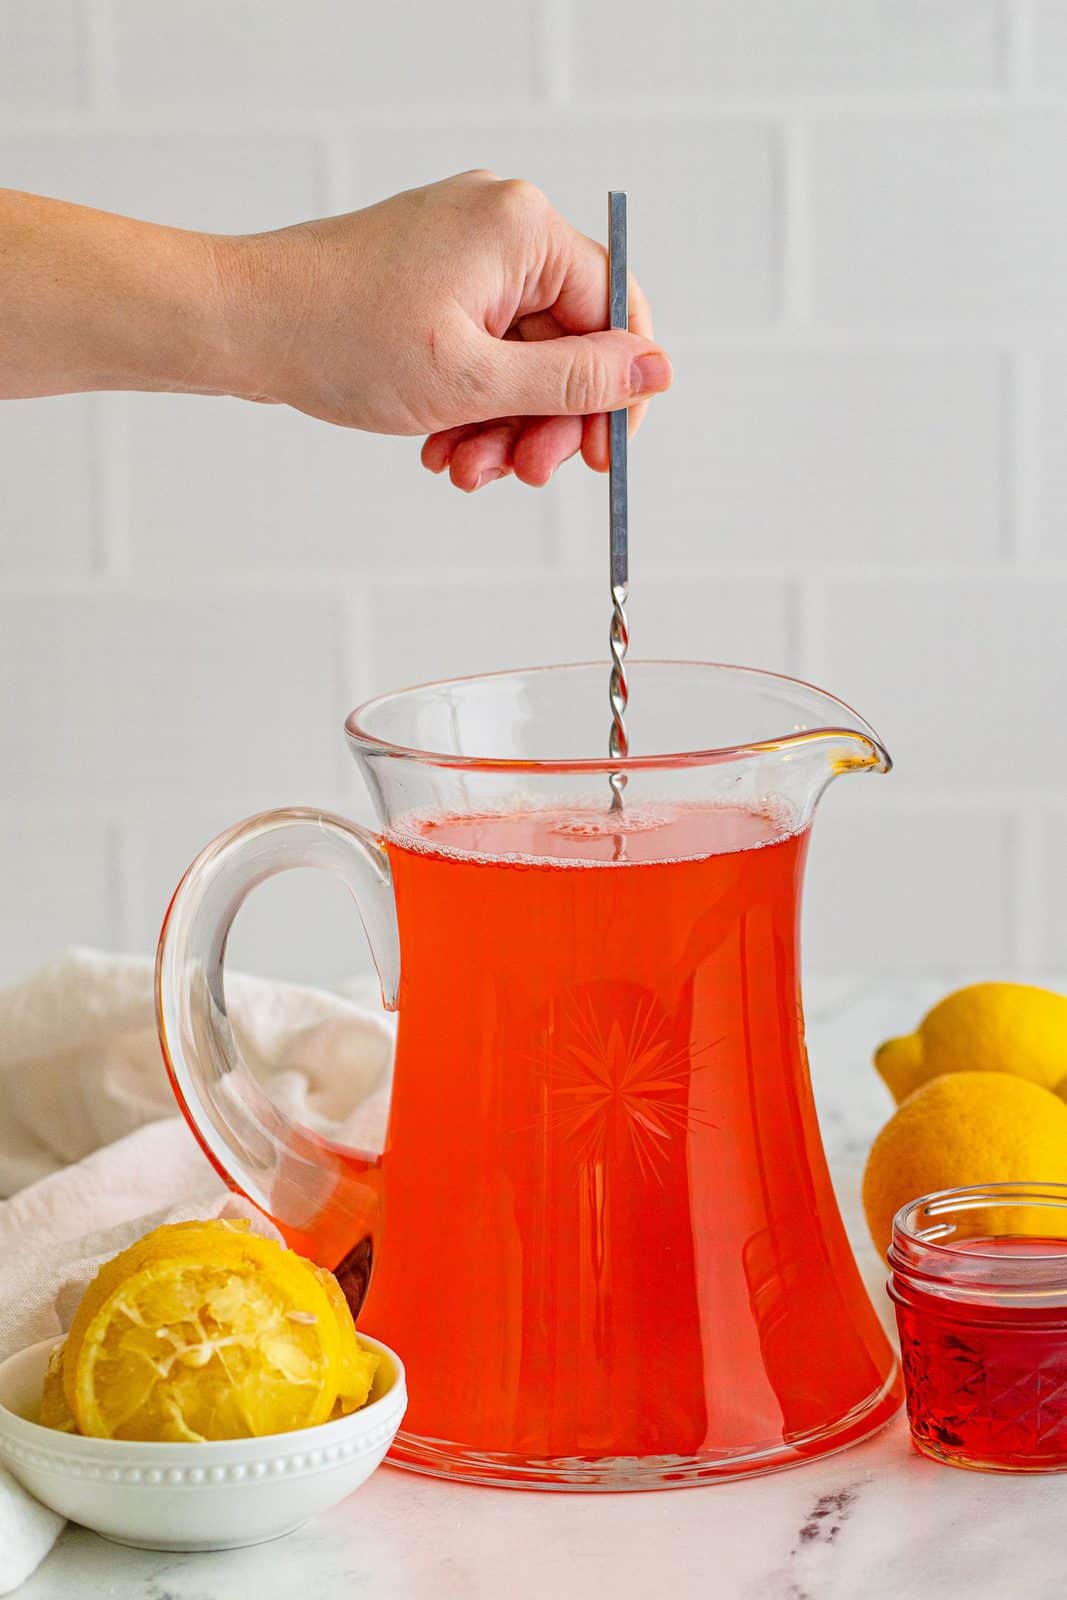 Hand stirring up Homemade Pink Lemonade Recipe in pitcher.